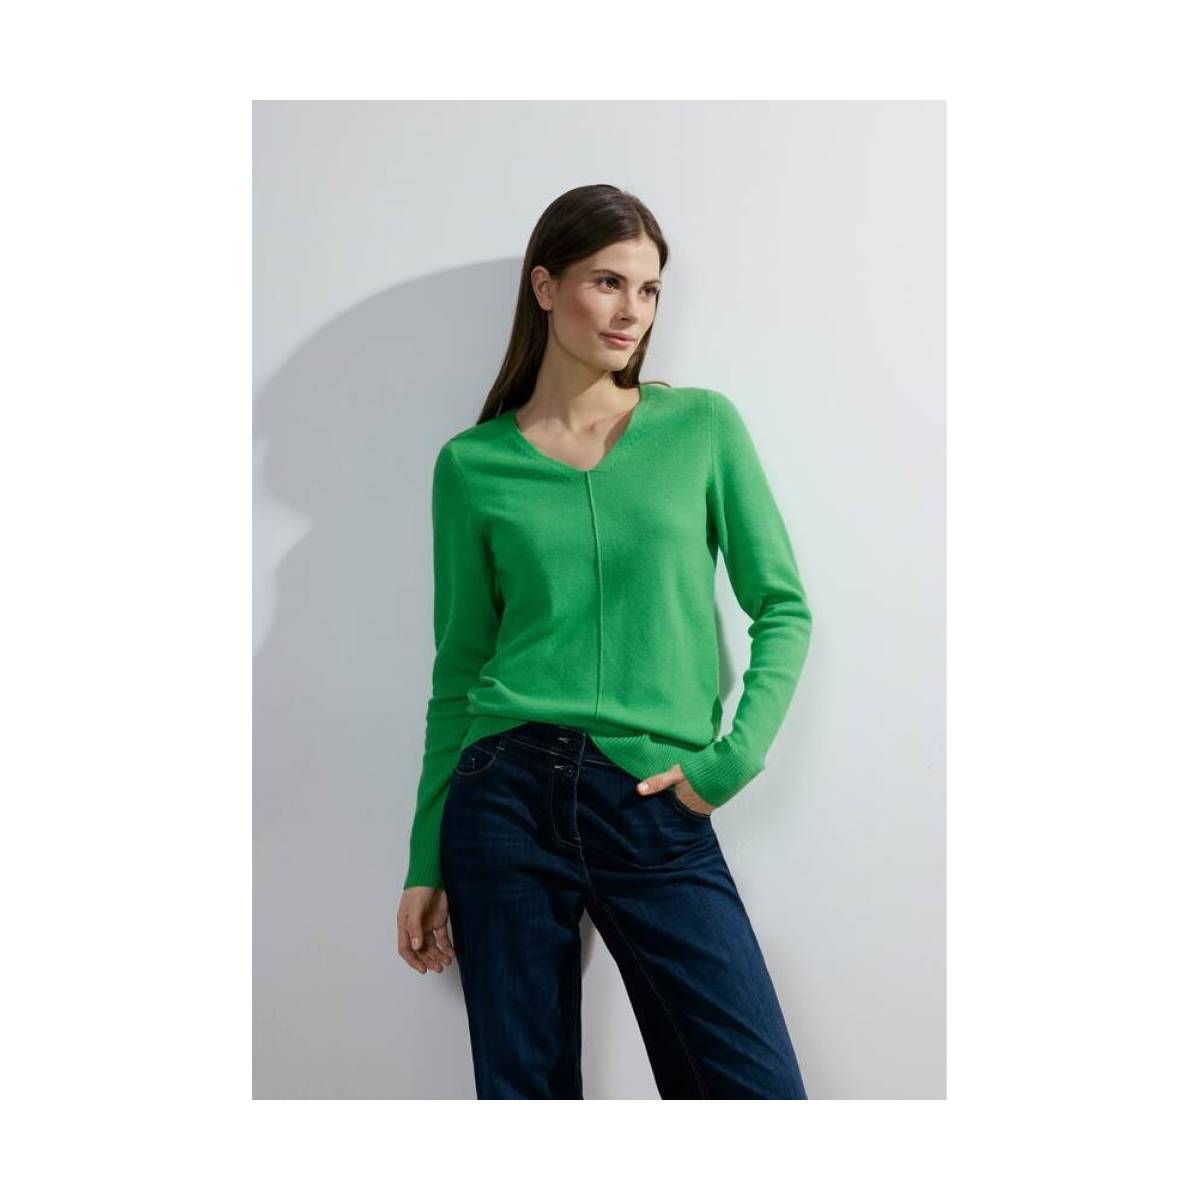 CECIL  tricot pull's en gilets licht groen/color -  model b302613 - Dameskleding tricot pull's en gilets groen